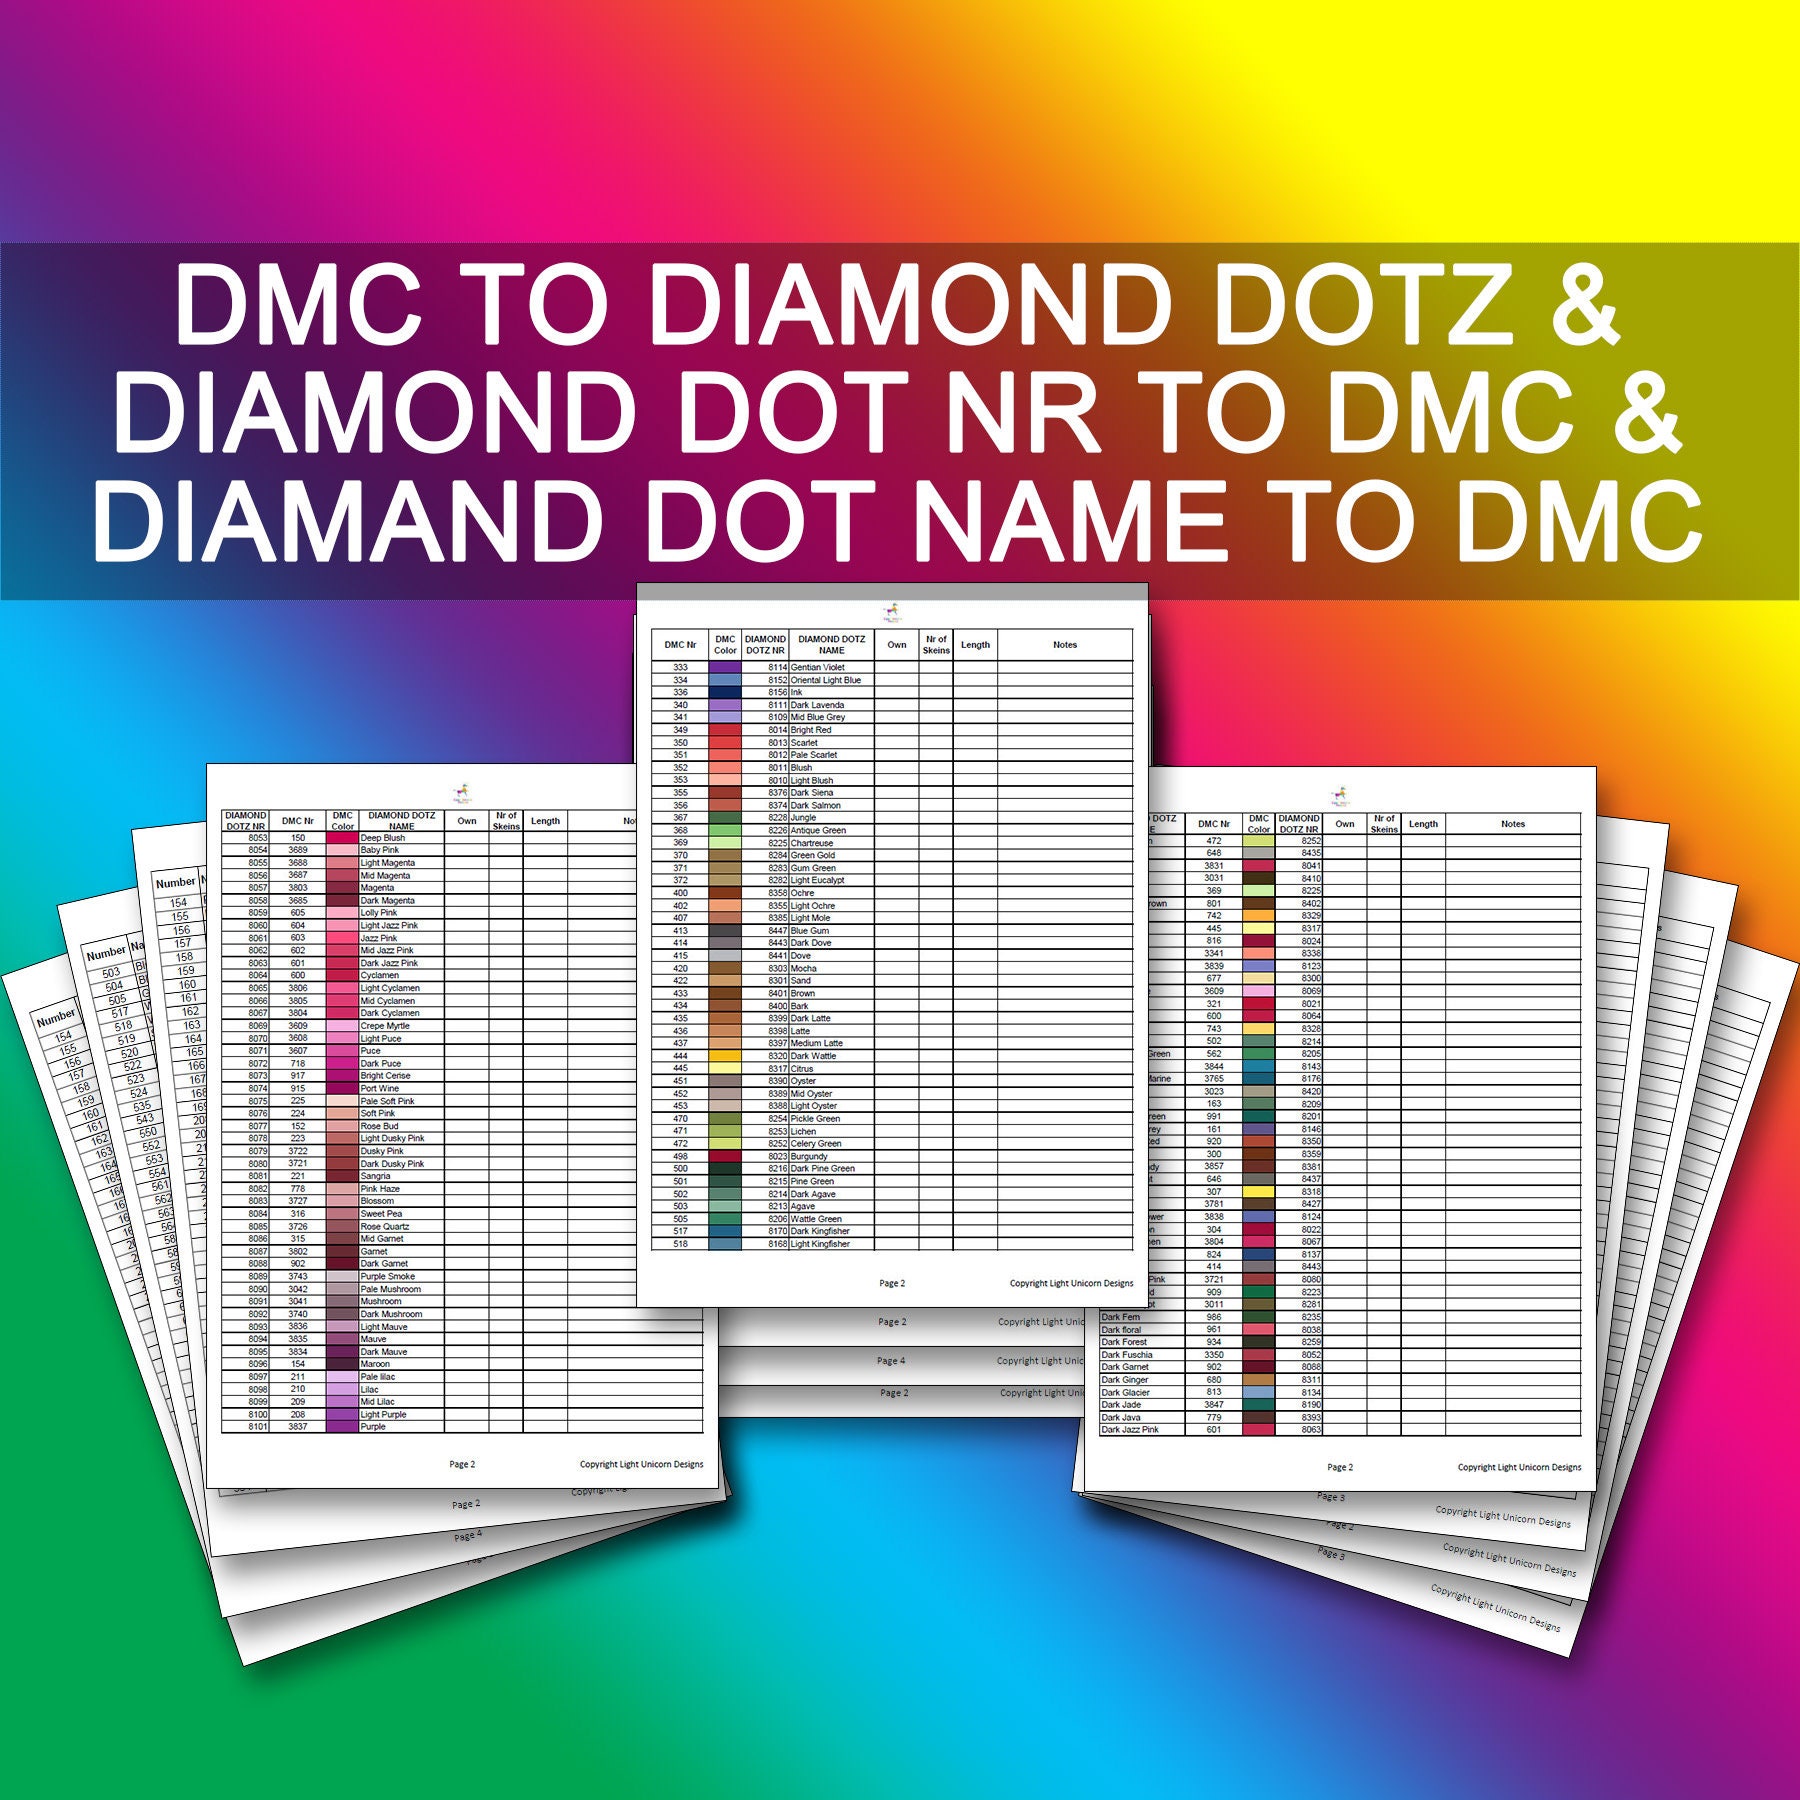 Large DMC AB Aurora Borealis Diamond Painting Labels, Color